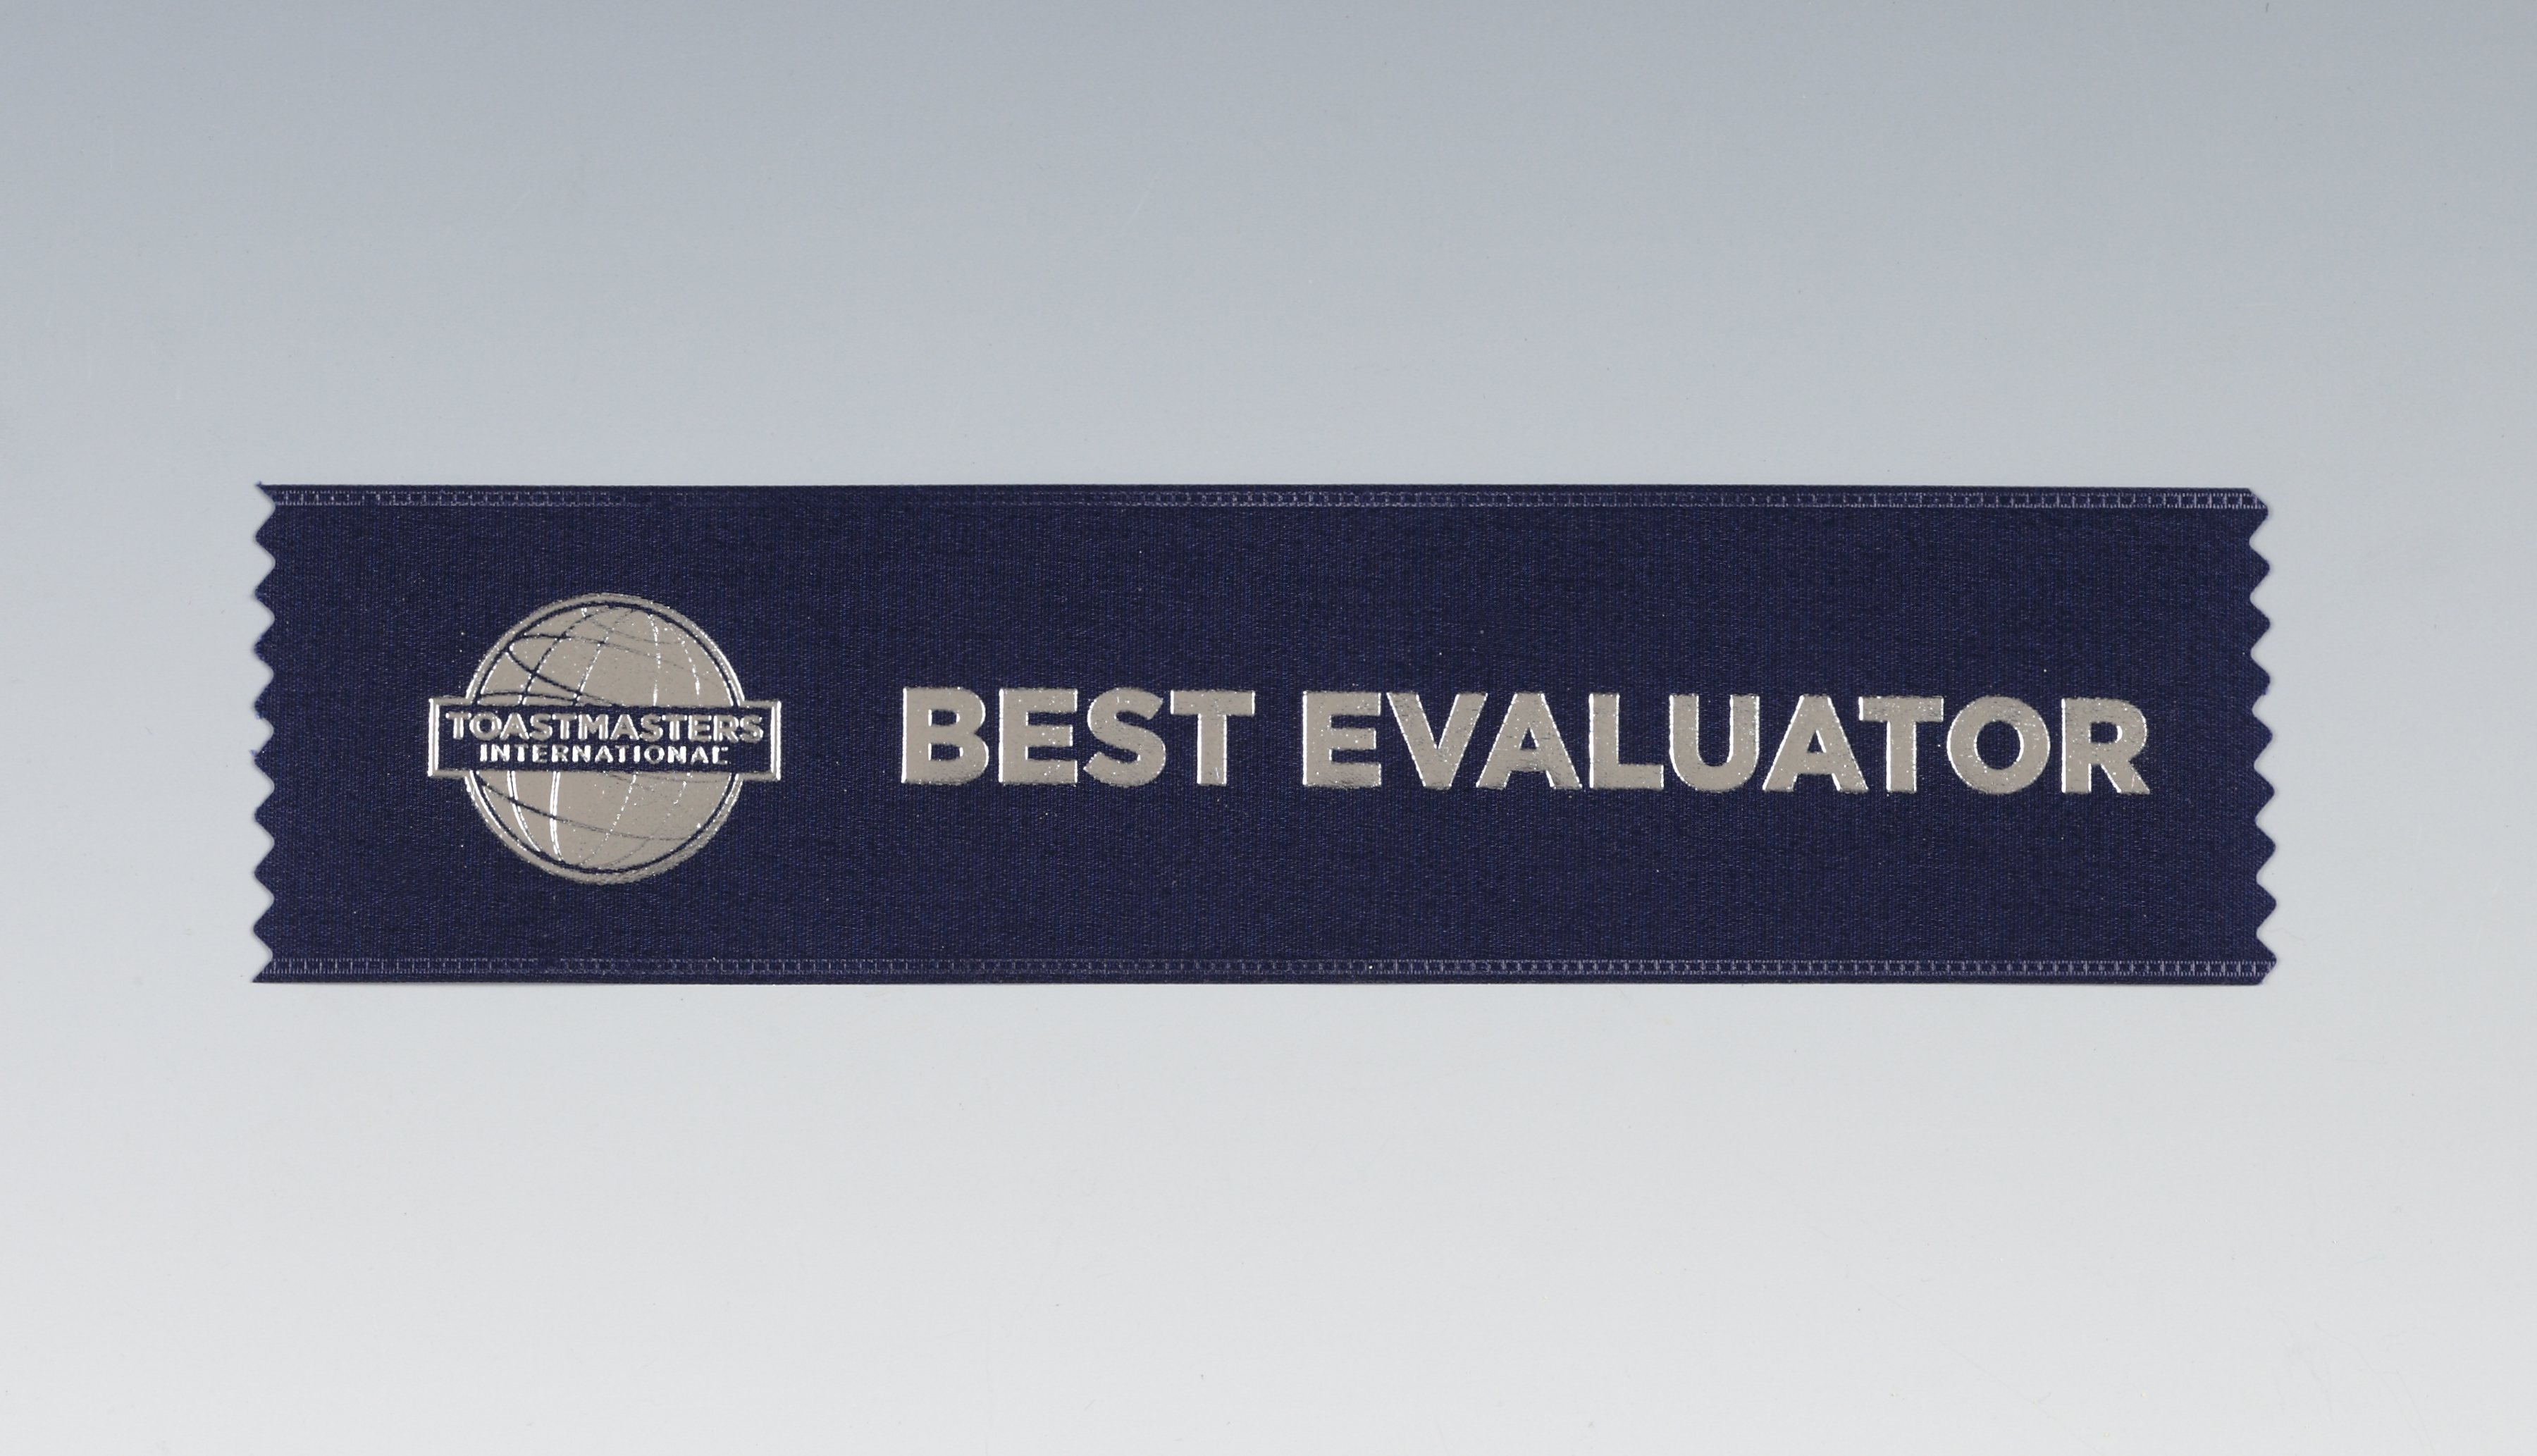 Best Evaluator Ribbon (set of 10)